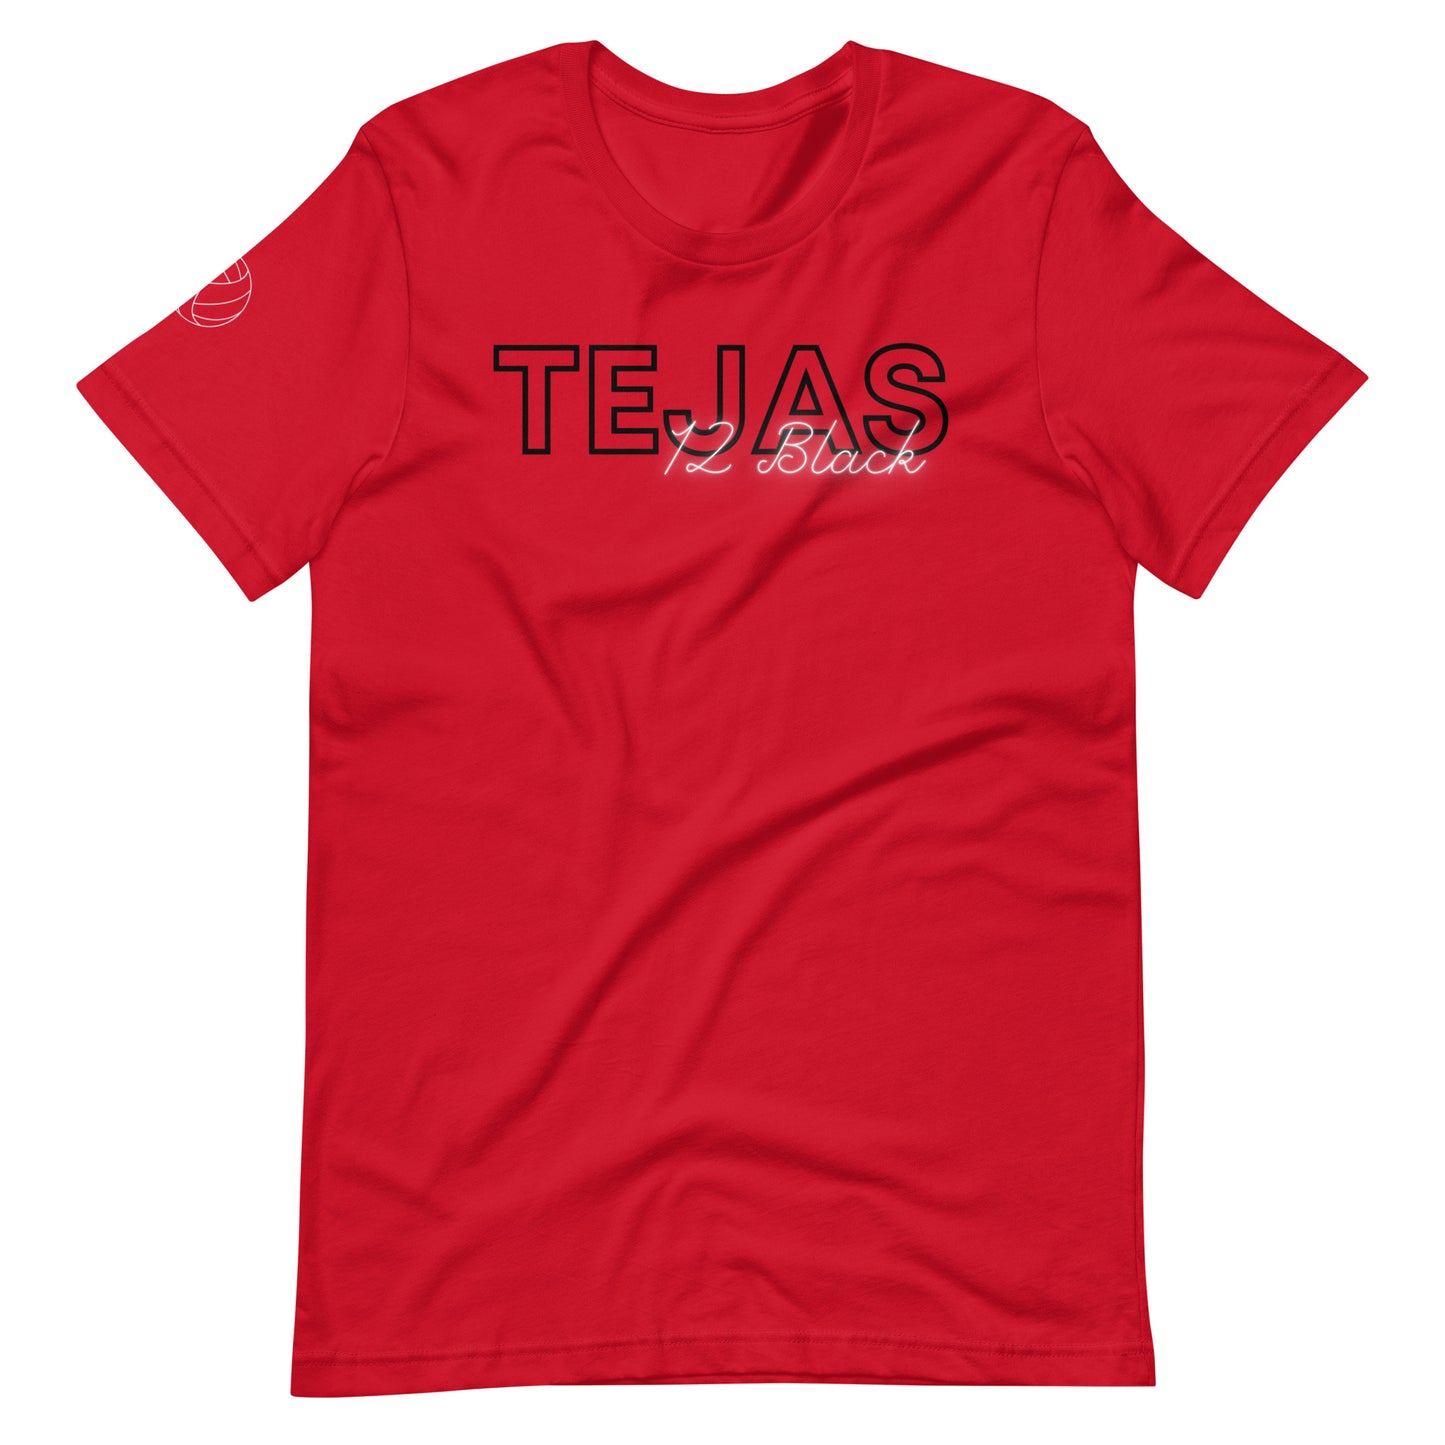 Tejas - 12 Black Abbey - Unisex t-shirt